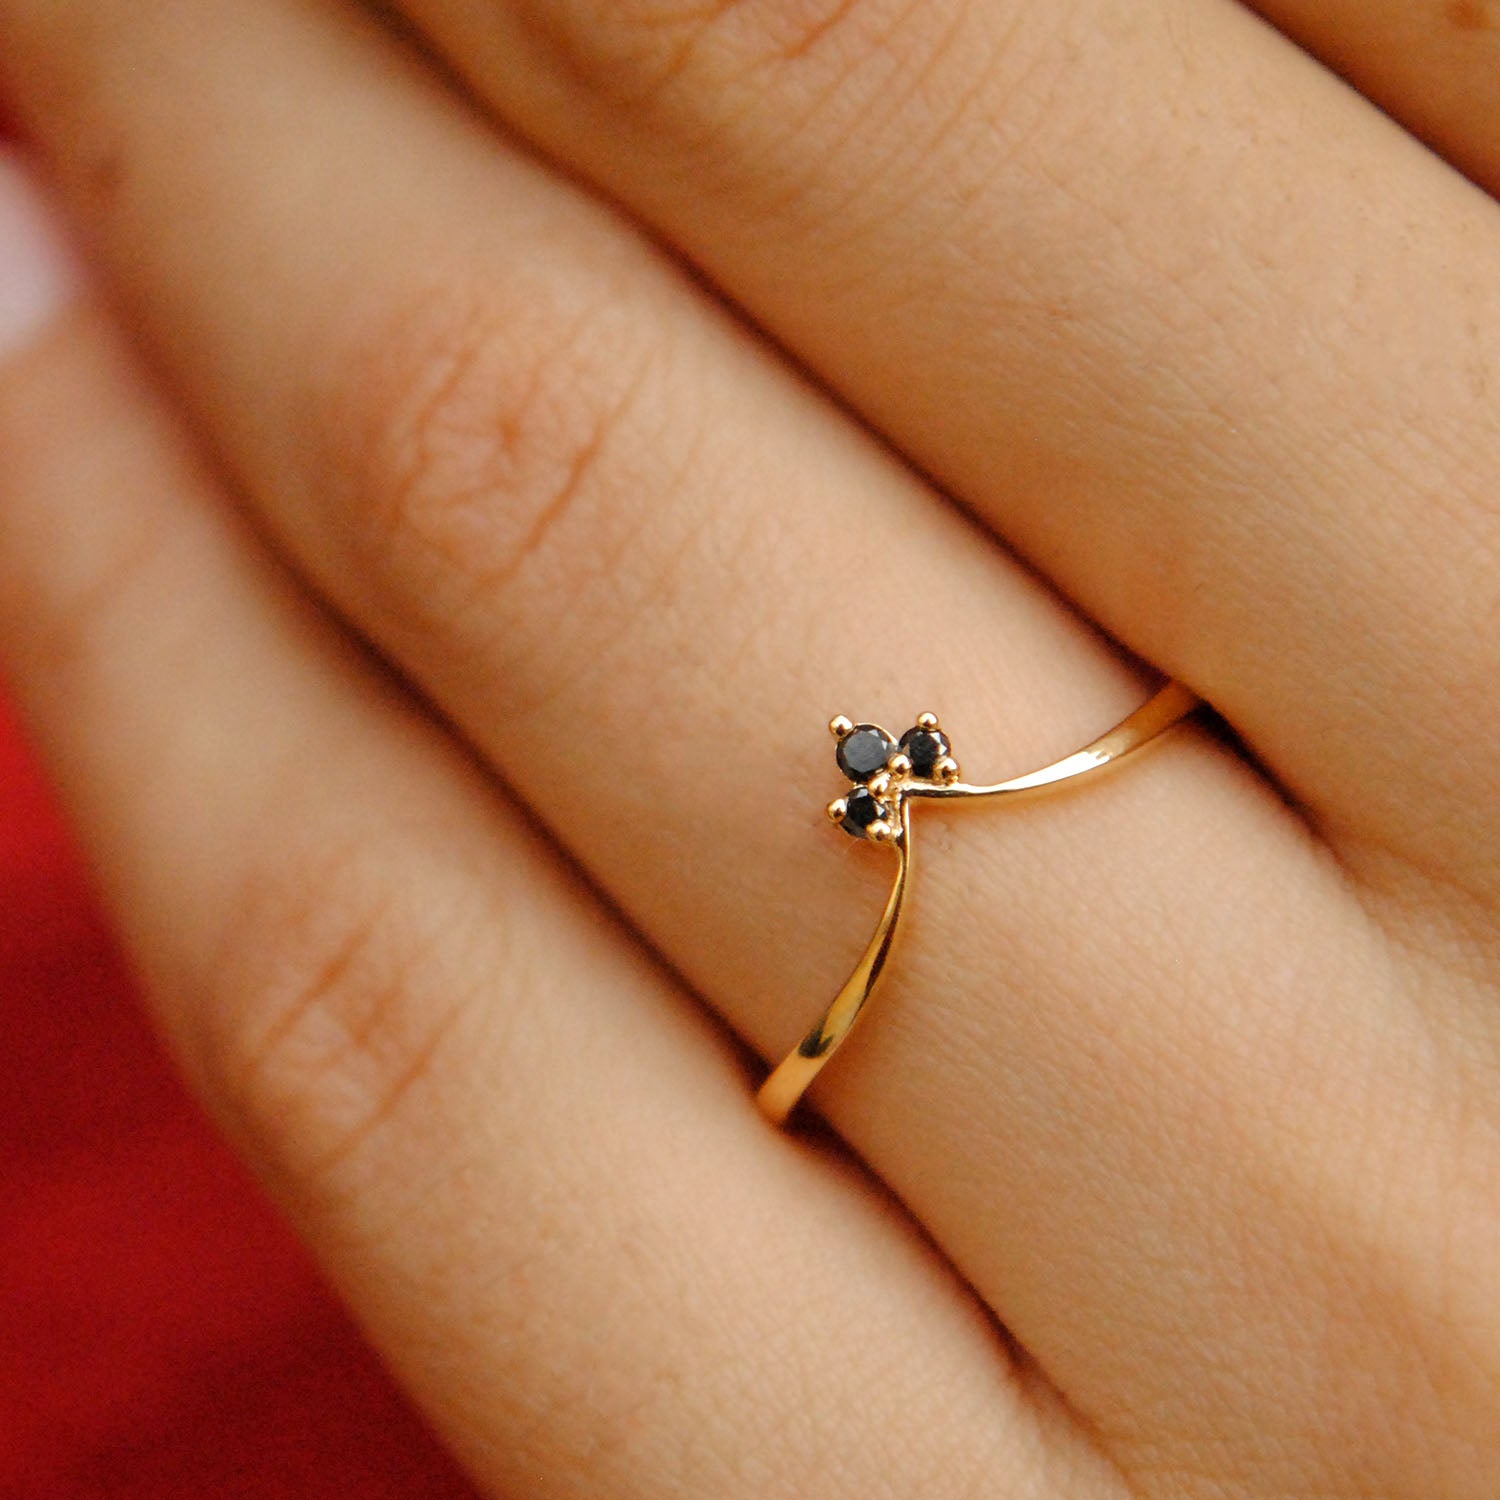 Buy Black Diamonds Cluster Ring, Cluster Black Diamond Ring, Black Diamond  Wedding Ring, Black Diamond Ring, Minimalist Black Diamond Ring Online in  India - Etsy